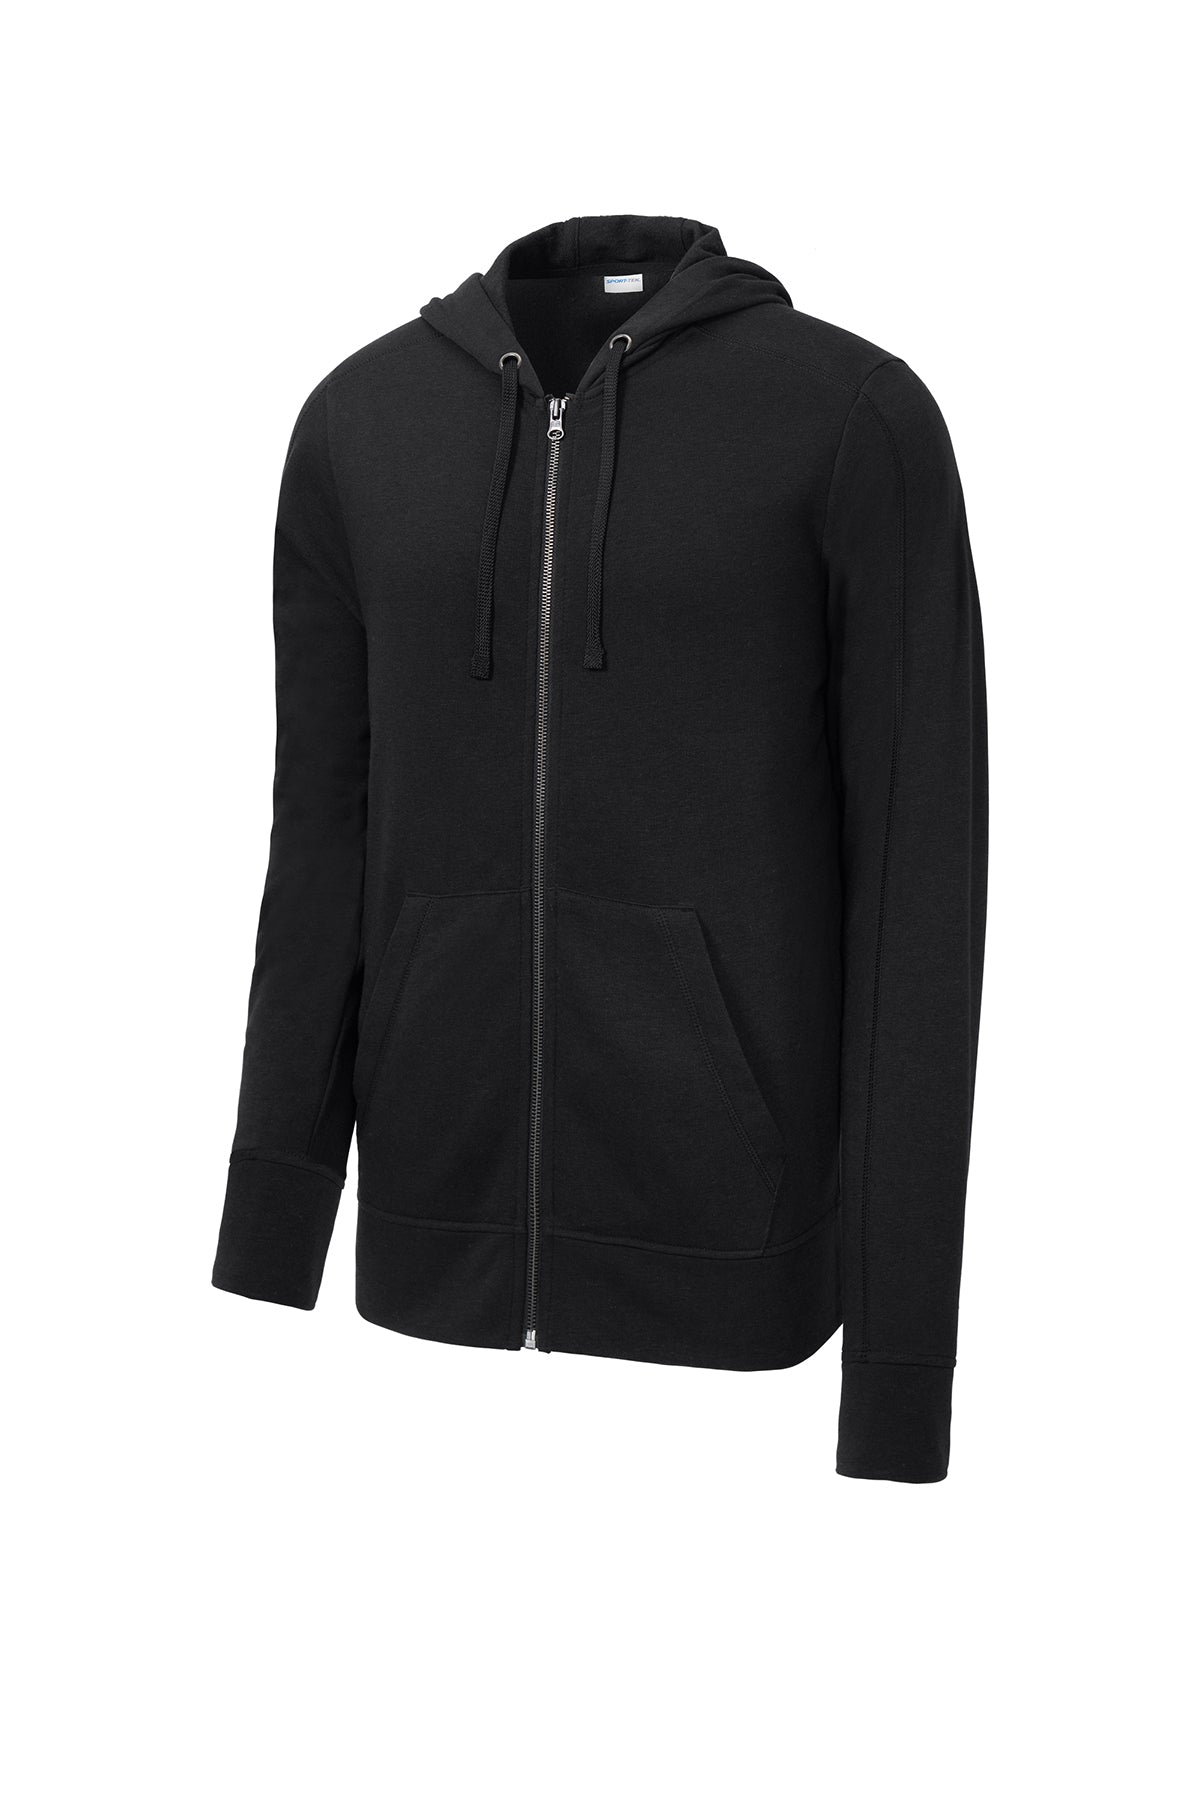 ST293 Sport-Tek ® PosiCharge ® Tri-Blend Wicking Fleece Full-Zip Hooded Jacket